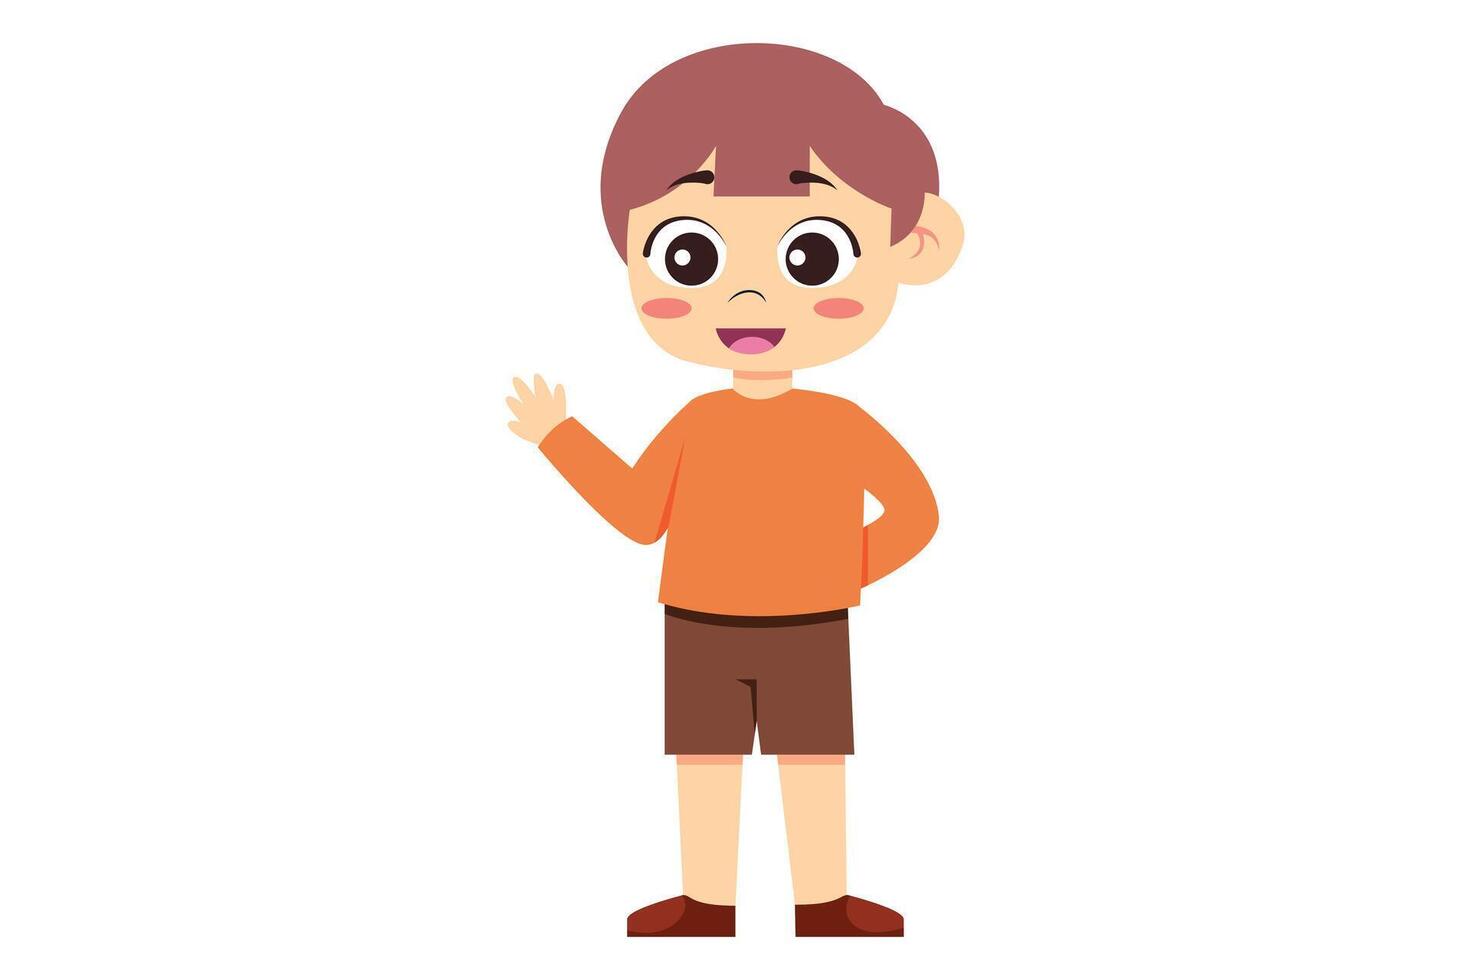 Cute Boy Character Design Illustration vector